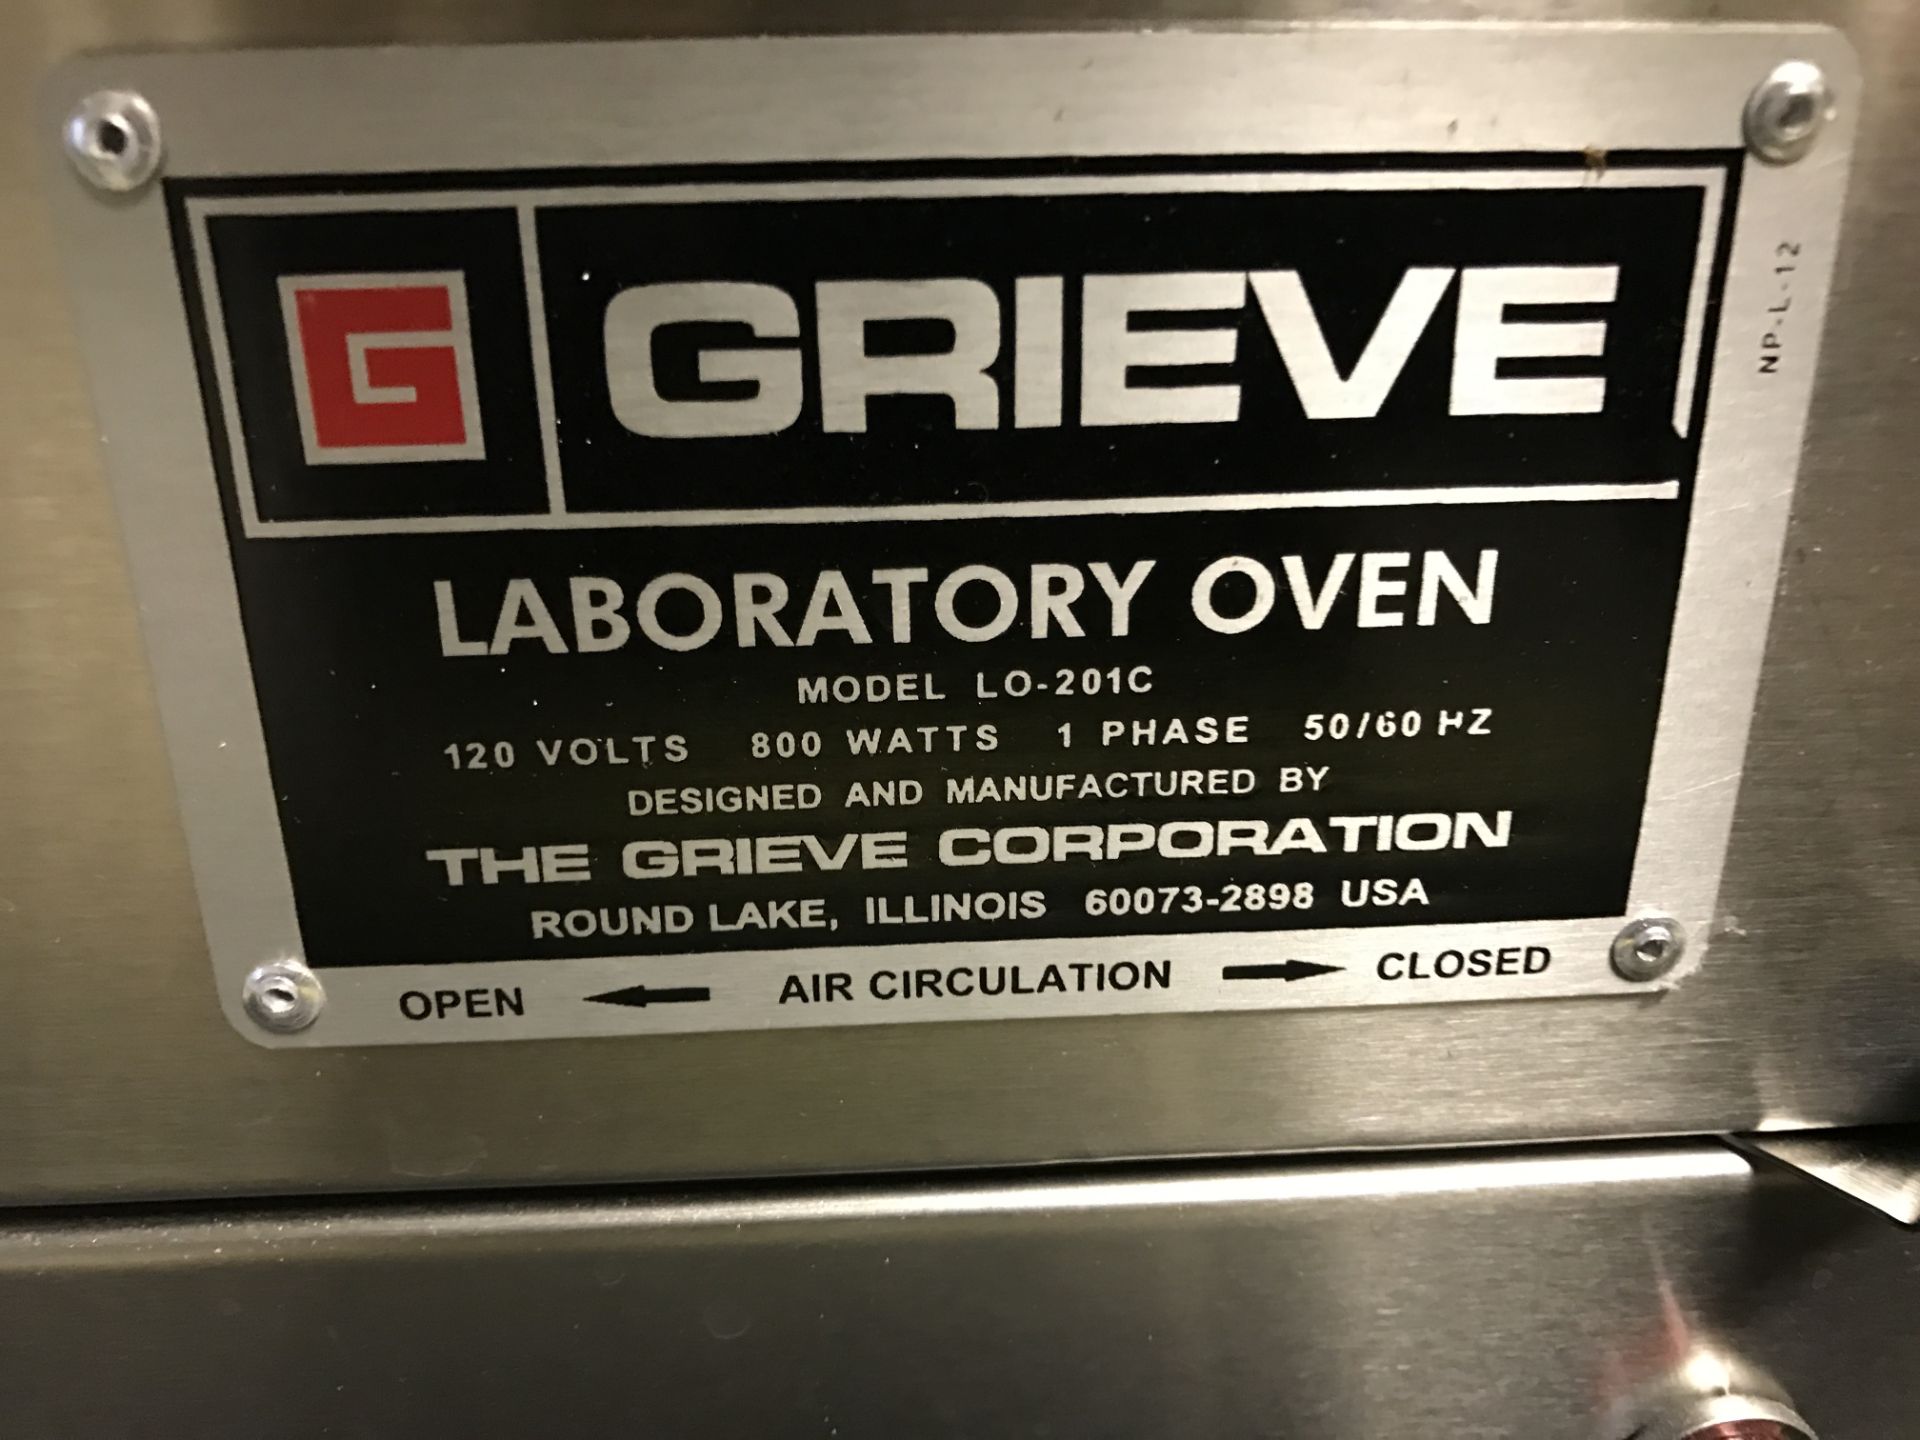 Laboratory Oven, Grieve model LO-201C - Image 2 of 2